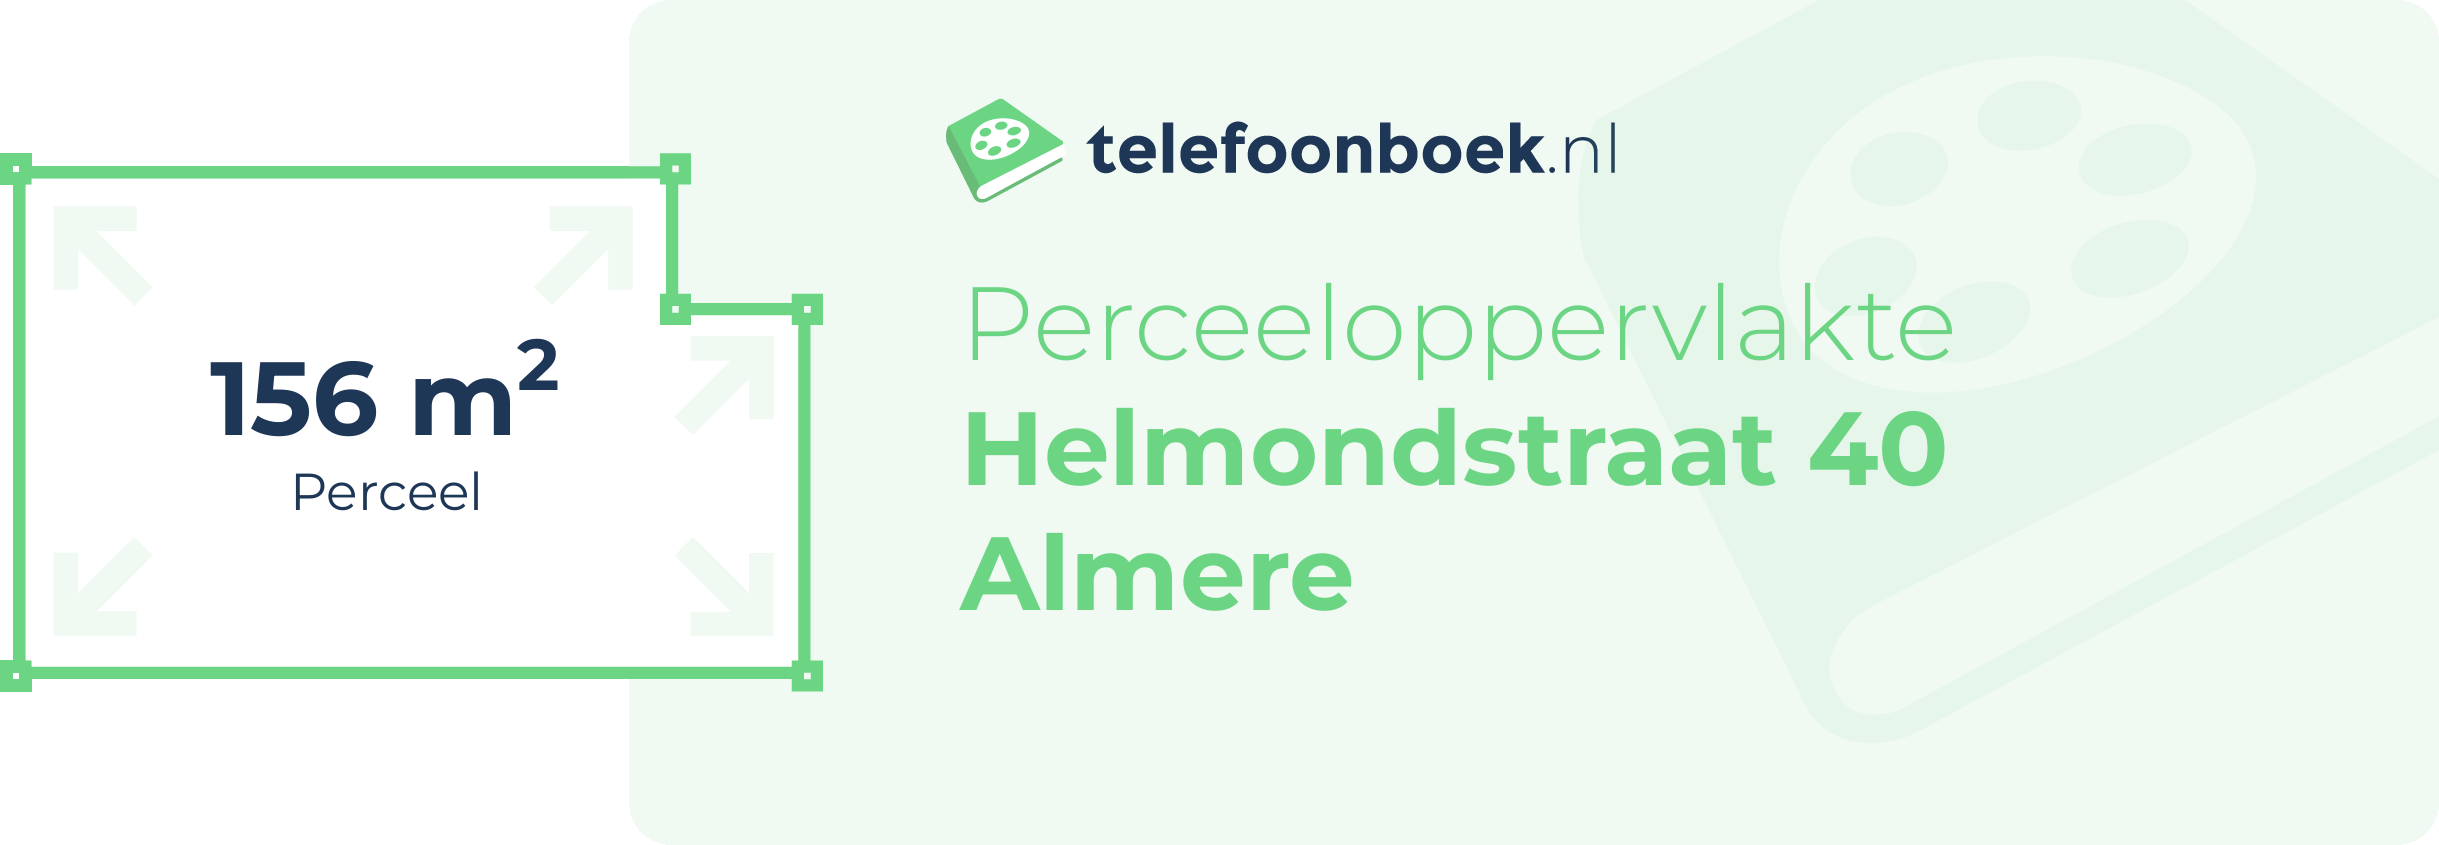 Perceeloppervlakte Helmondstraat 40 Almere